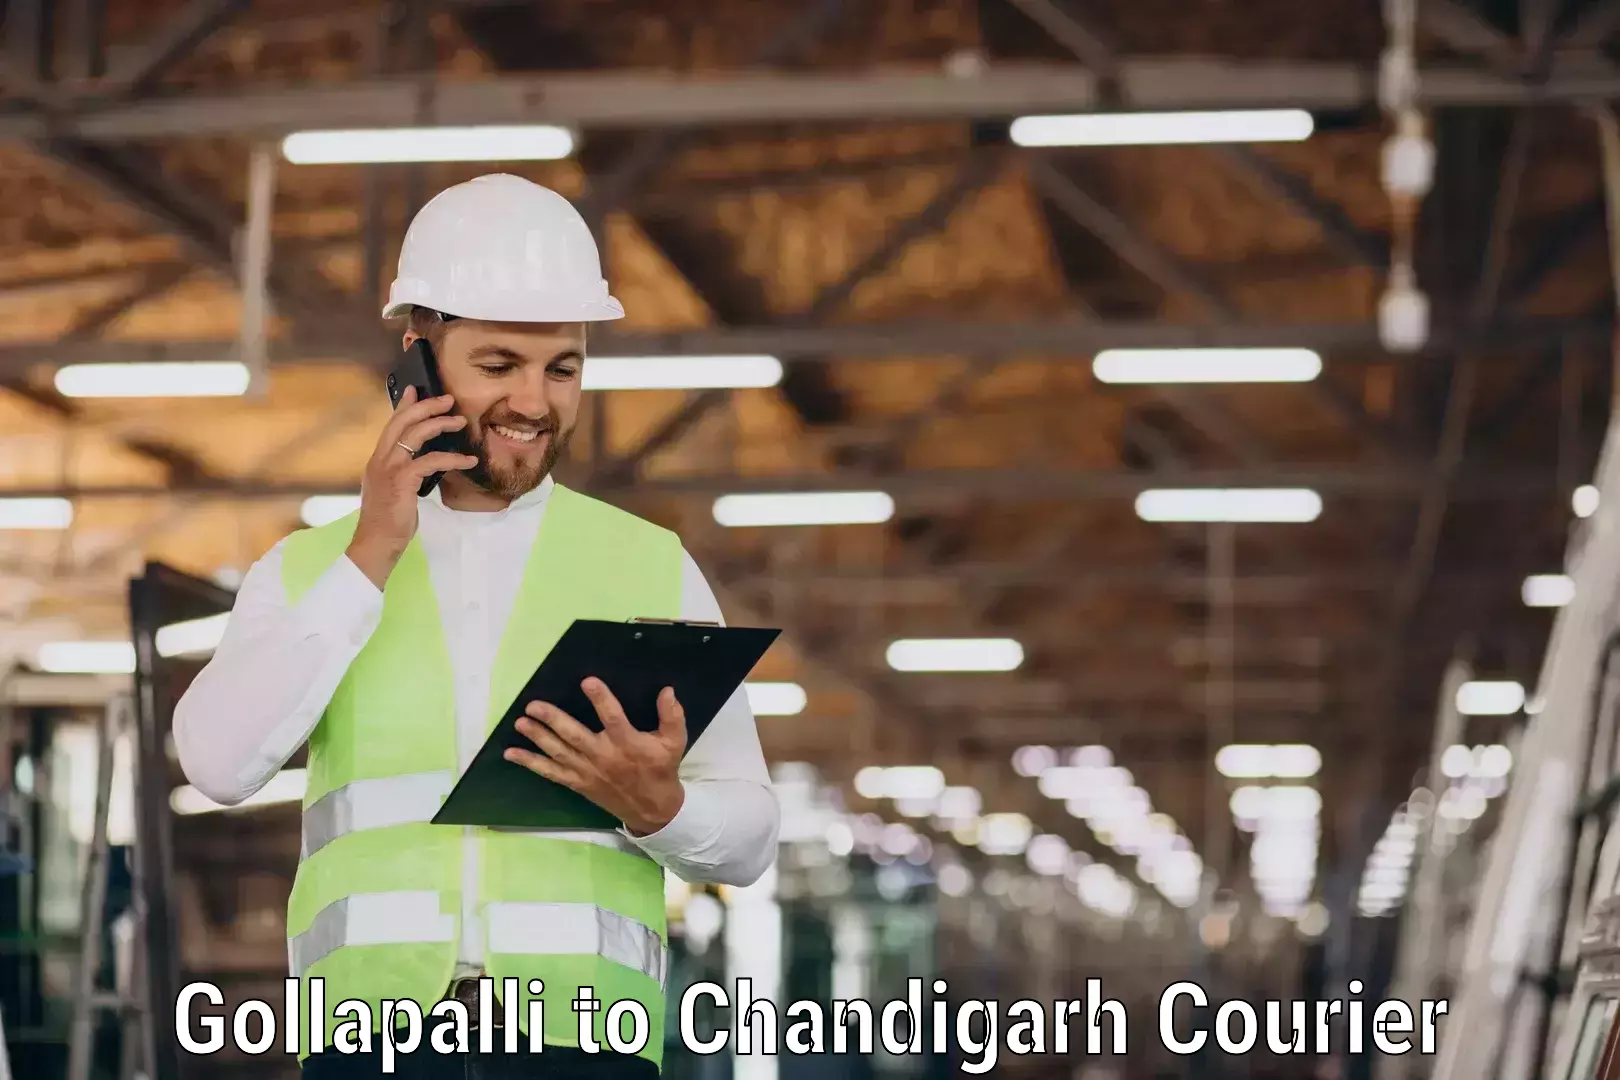 High-speed parcel service Gollapalli to Chandigarh